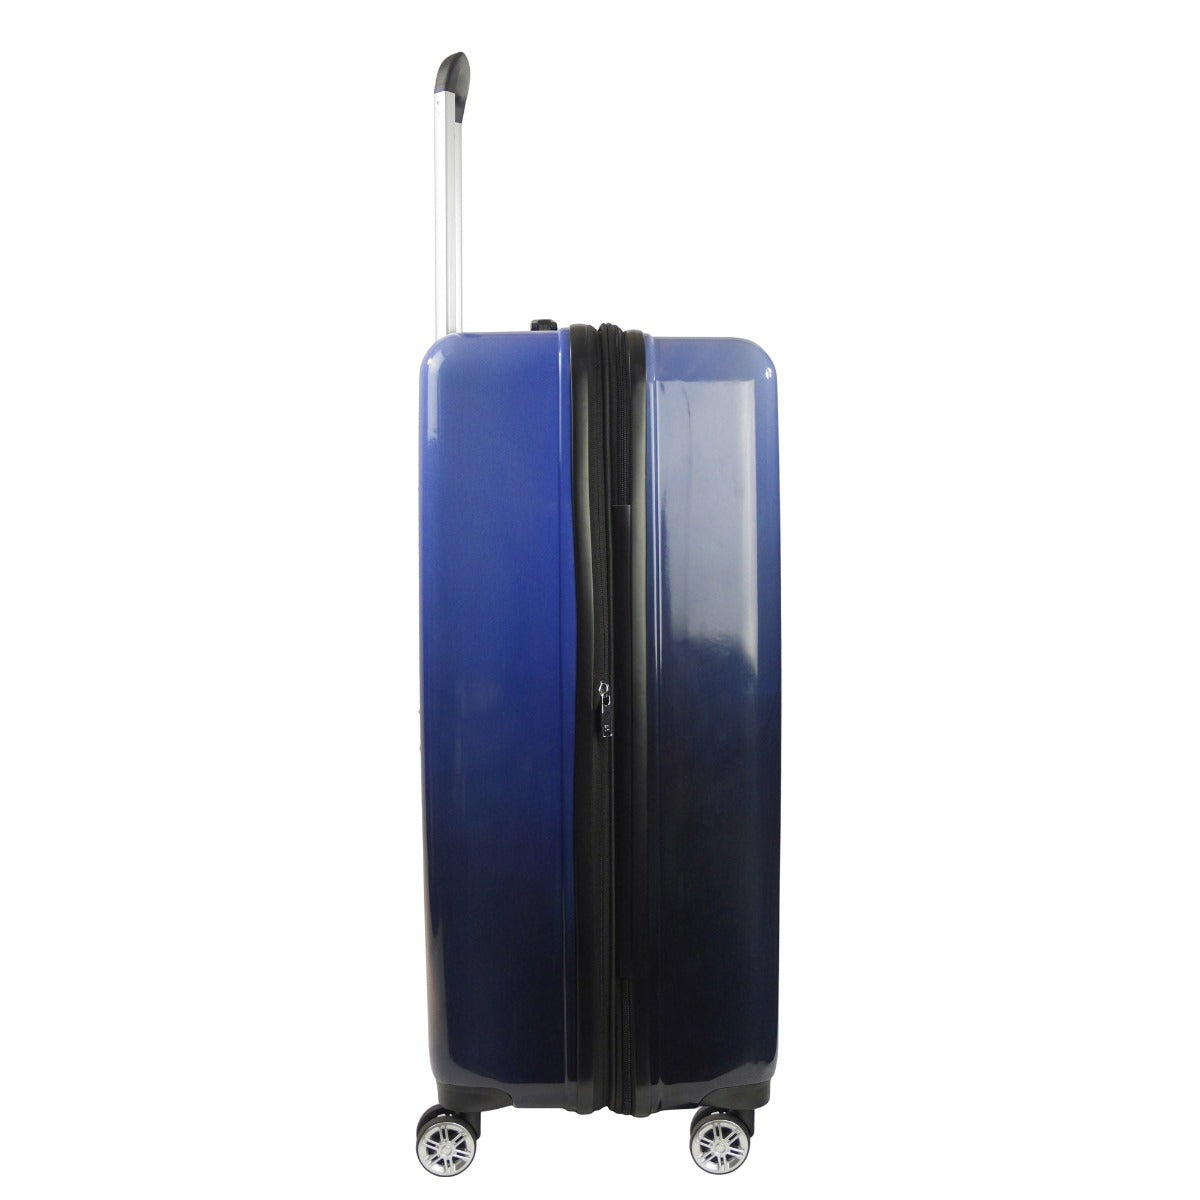 Ful Impulse Ombre Hardside Spinner 31" Luggage, Blue